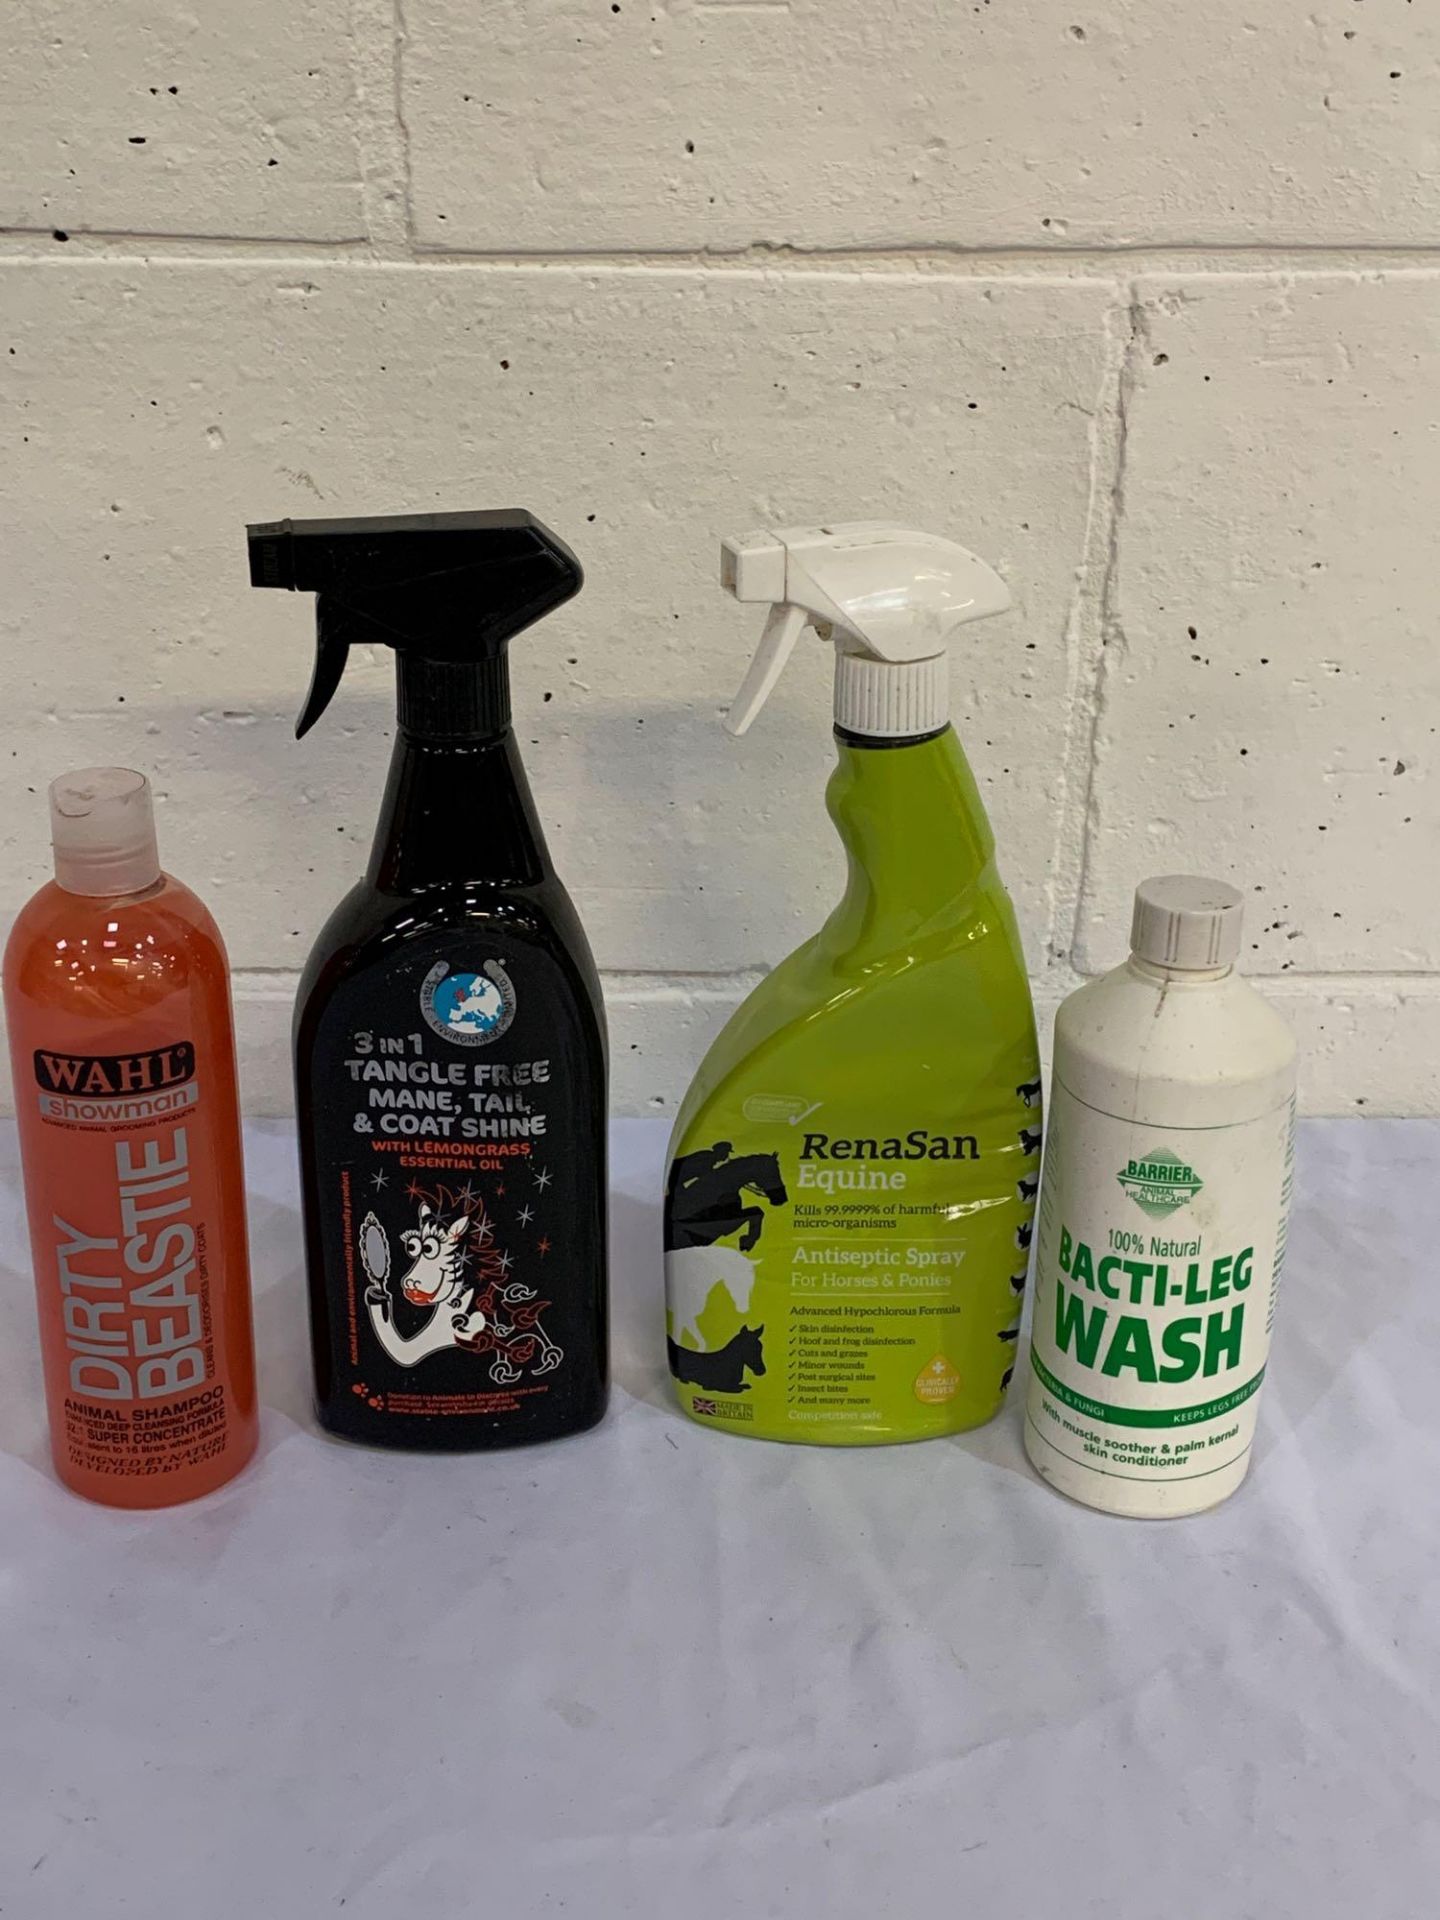 Barrier Balti-leg wash, Wahl showman shampoo, Renasan antiseptic spray and tangle free spray. - Image 2 of 2